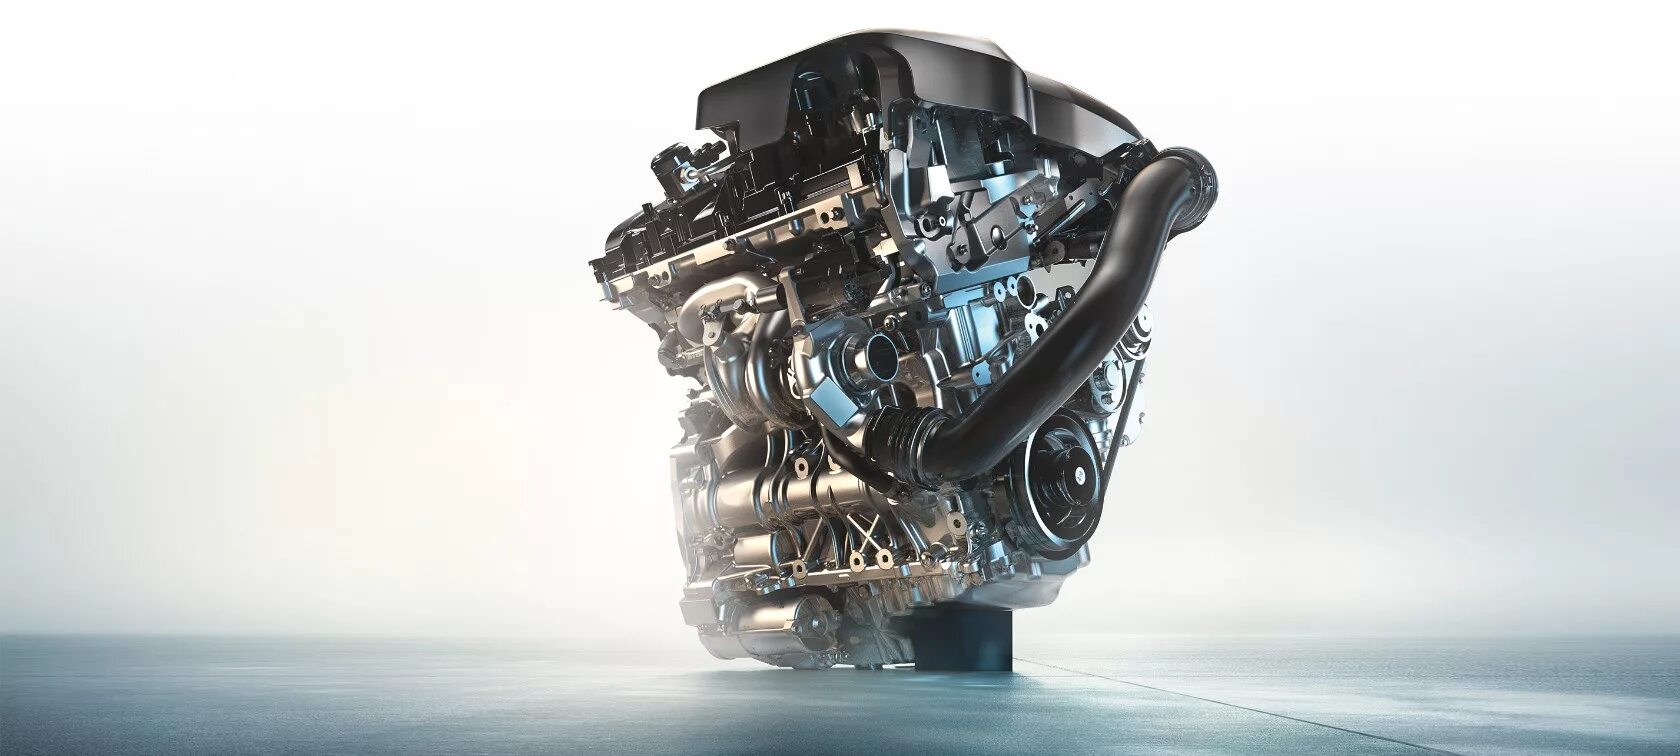 530e BMW двигатель. BMW New engine. 6-Цилиндровый бензиновый двигатель m TWINPOWER Turbo. БМВ м5 е60 мотор. Система двигателя bmw